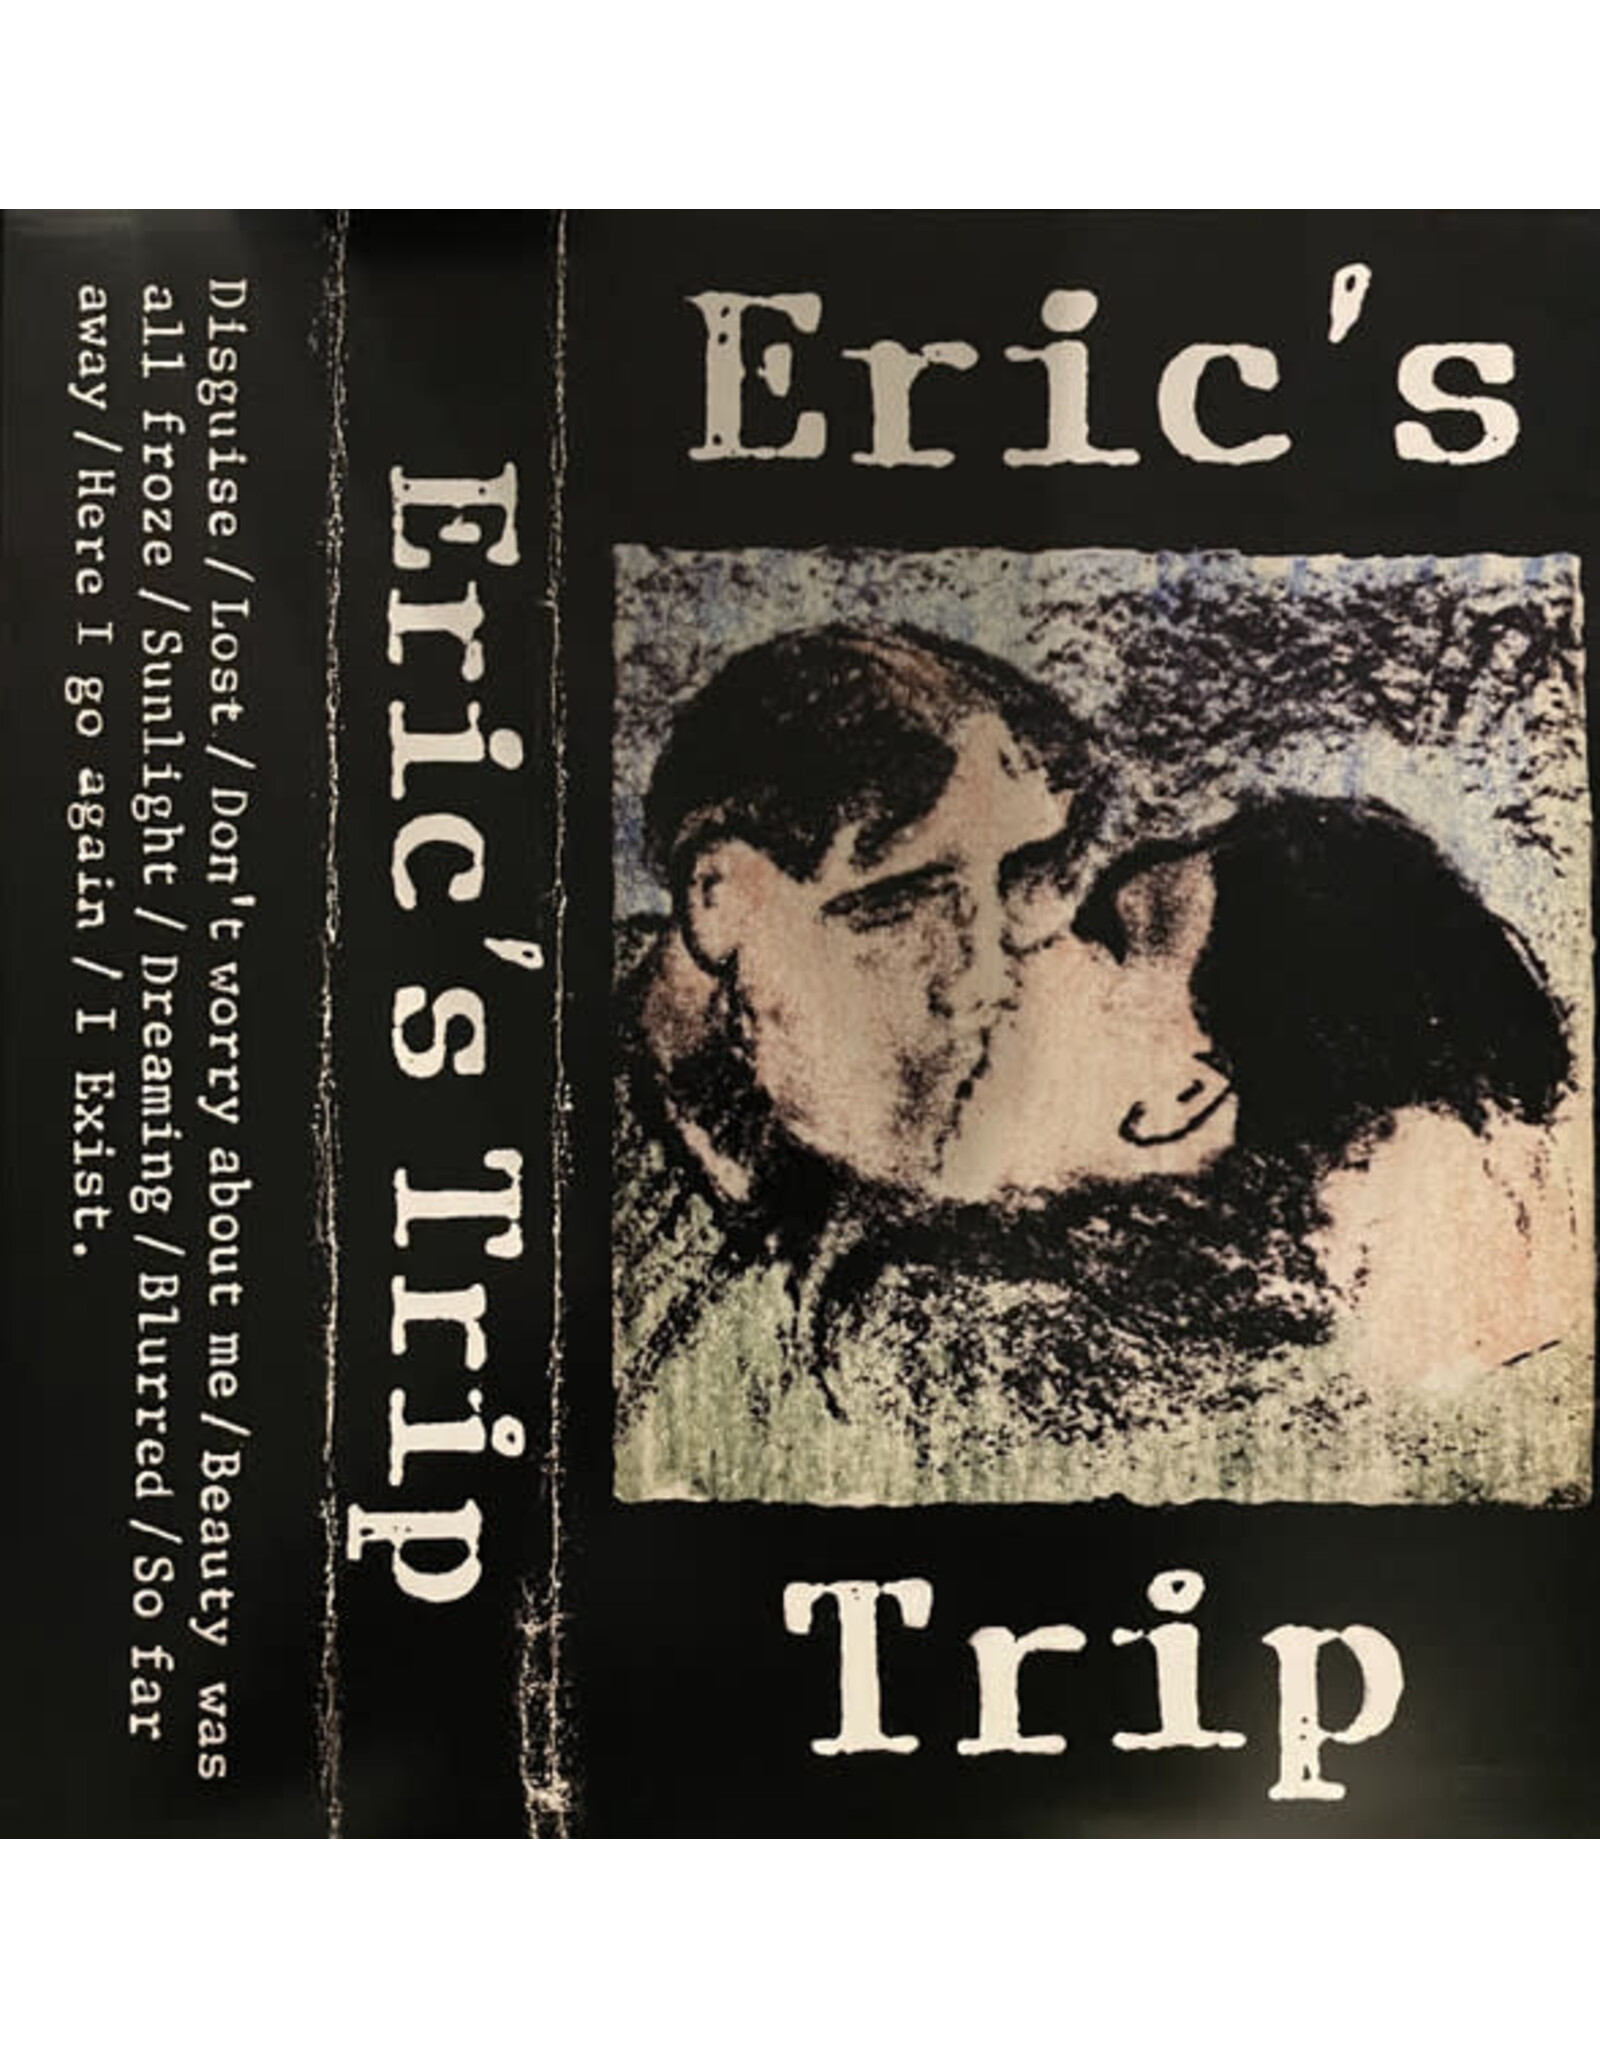 Eric's Trip - 1990 Demo LP